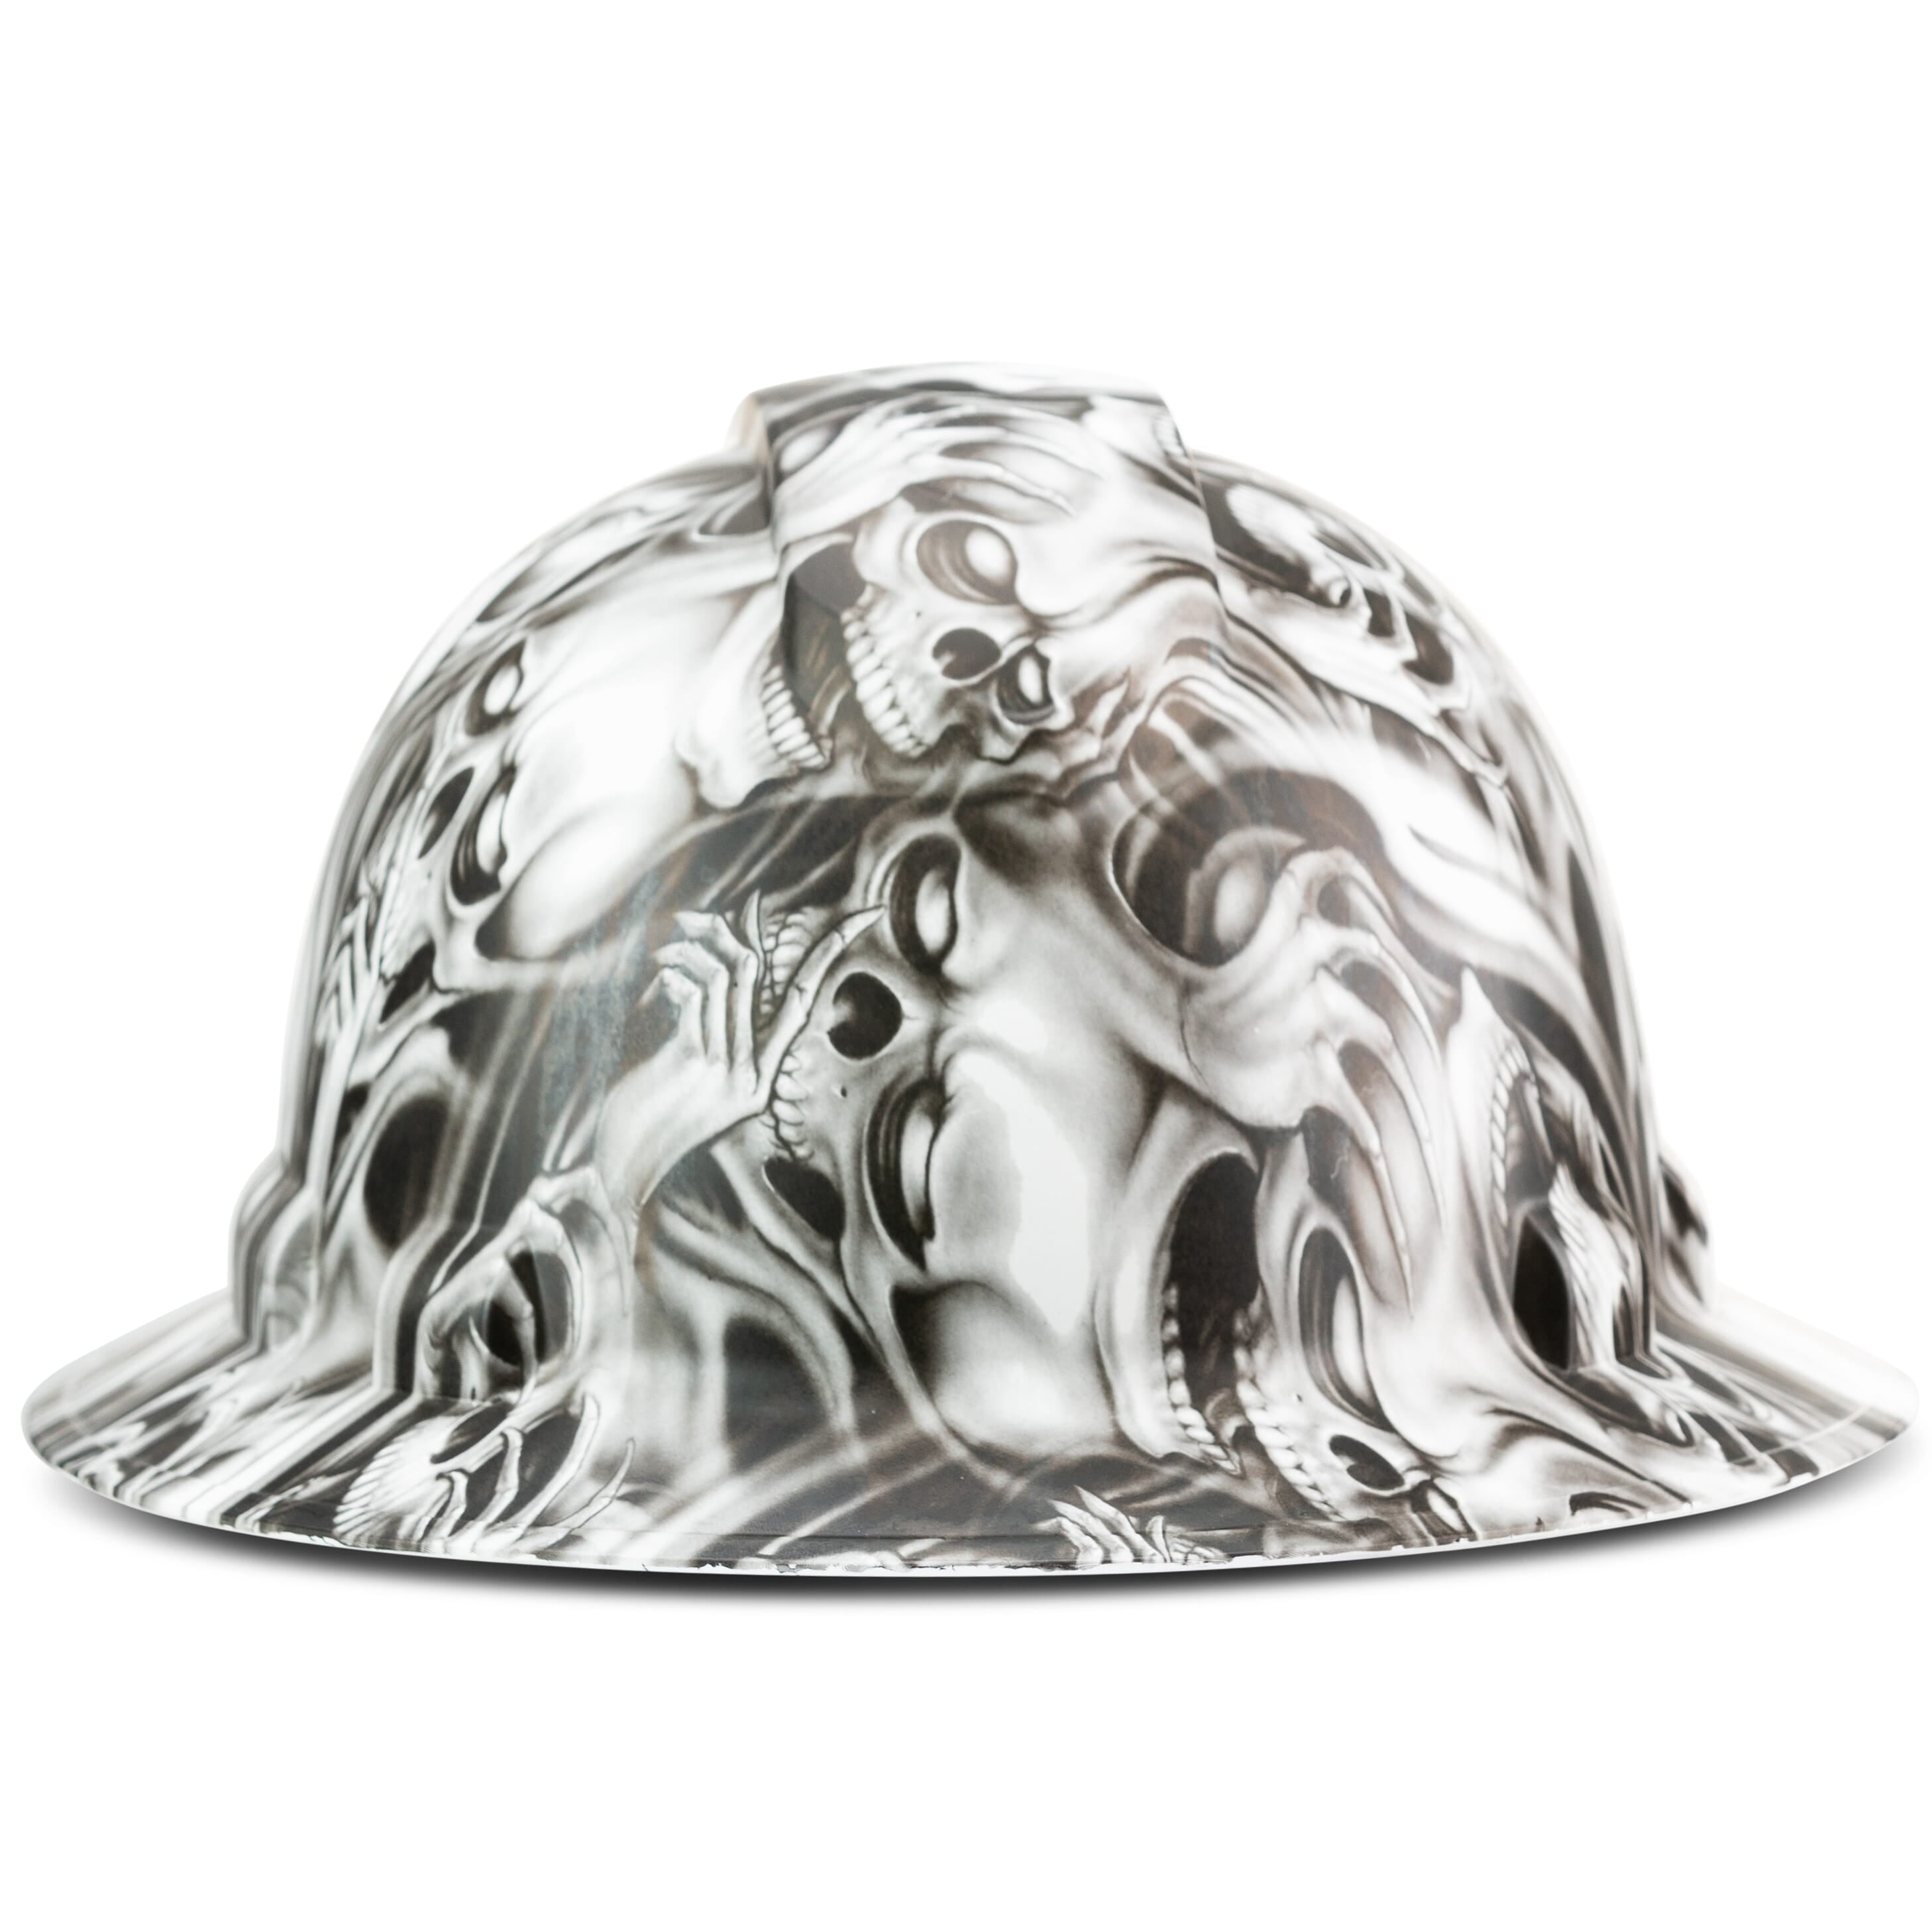 Full Brim Pyramex Hard Hat, Custom Three Wise Skulls Design, Safety Helmet, 6 Point